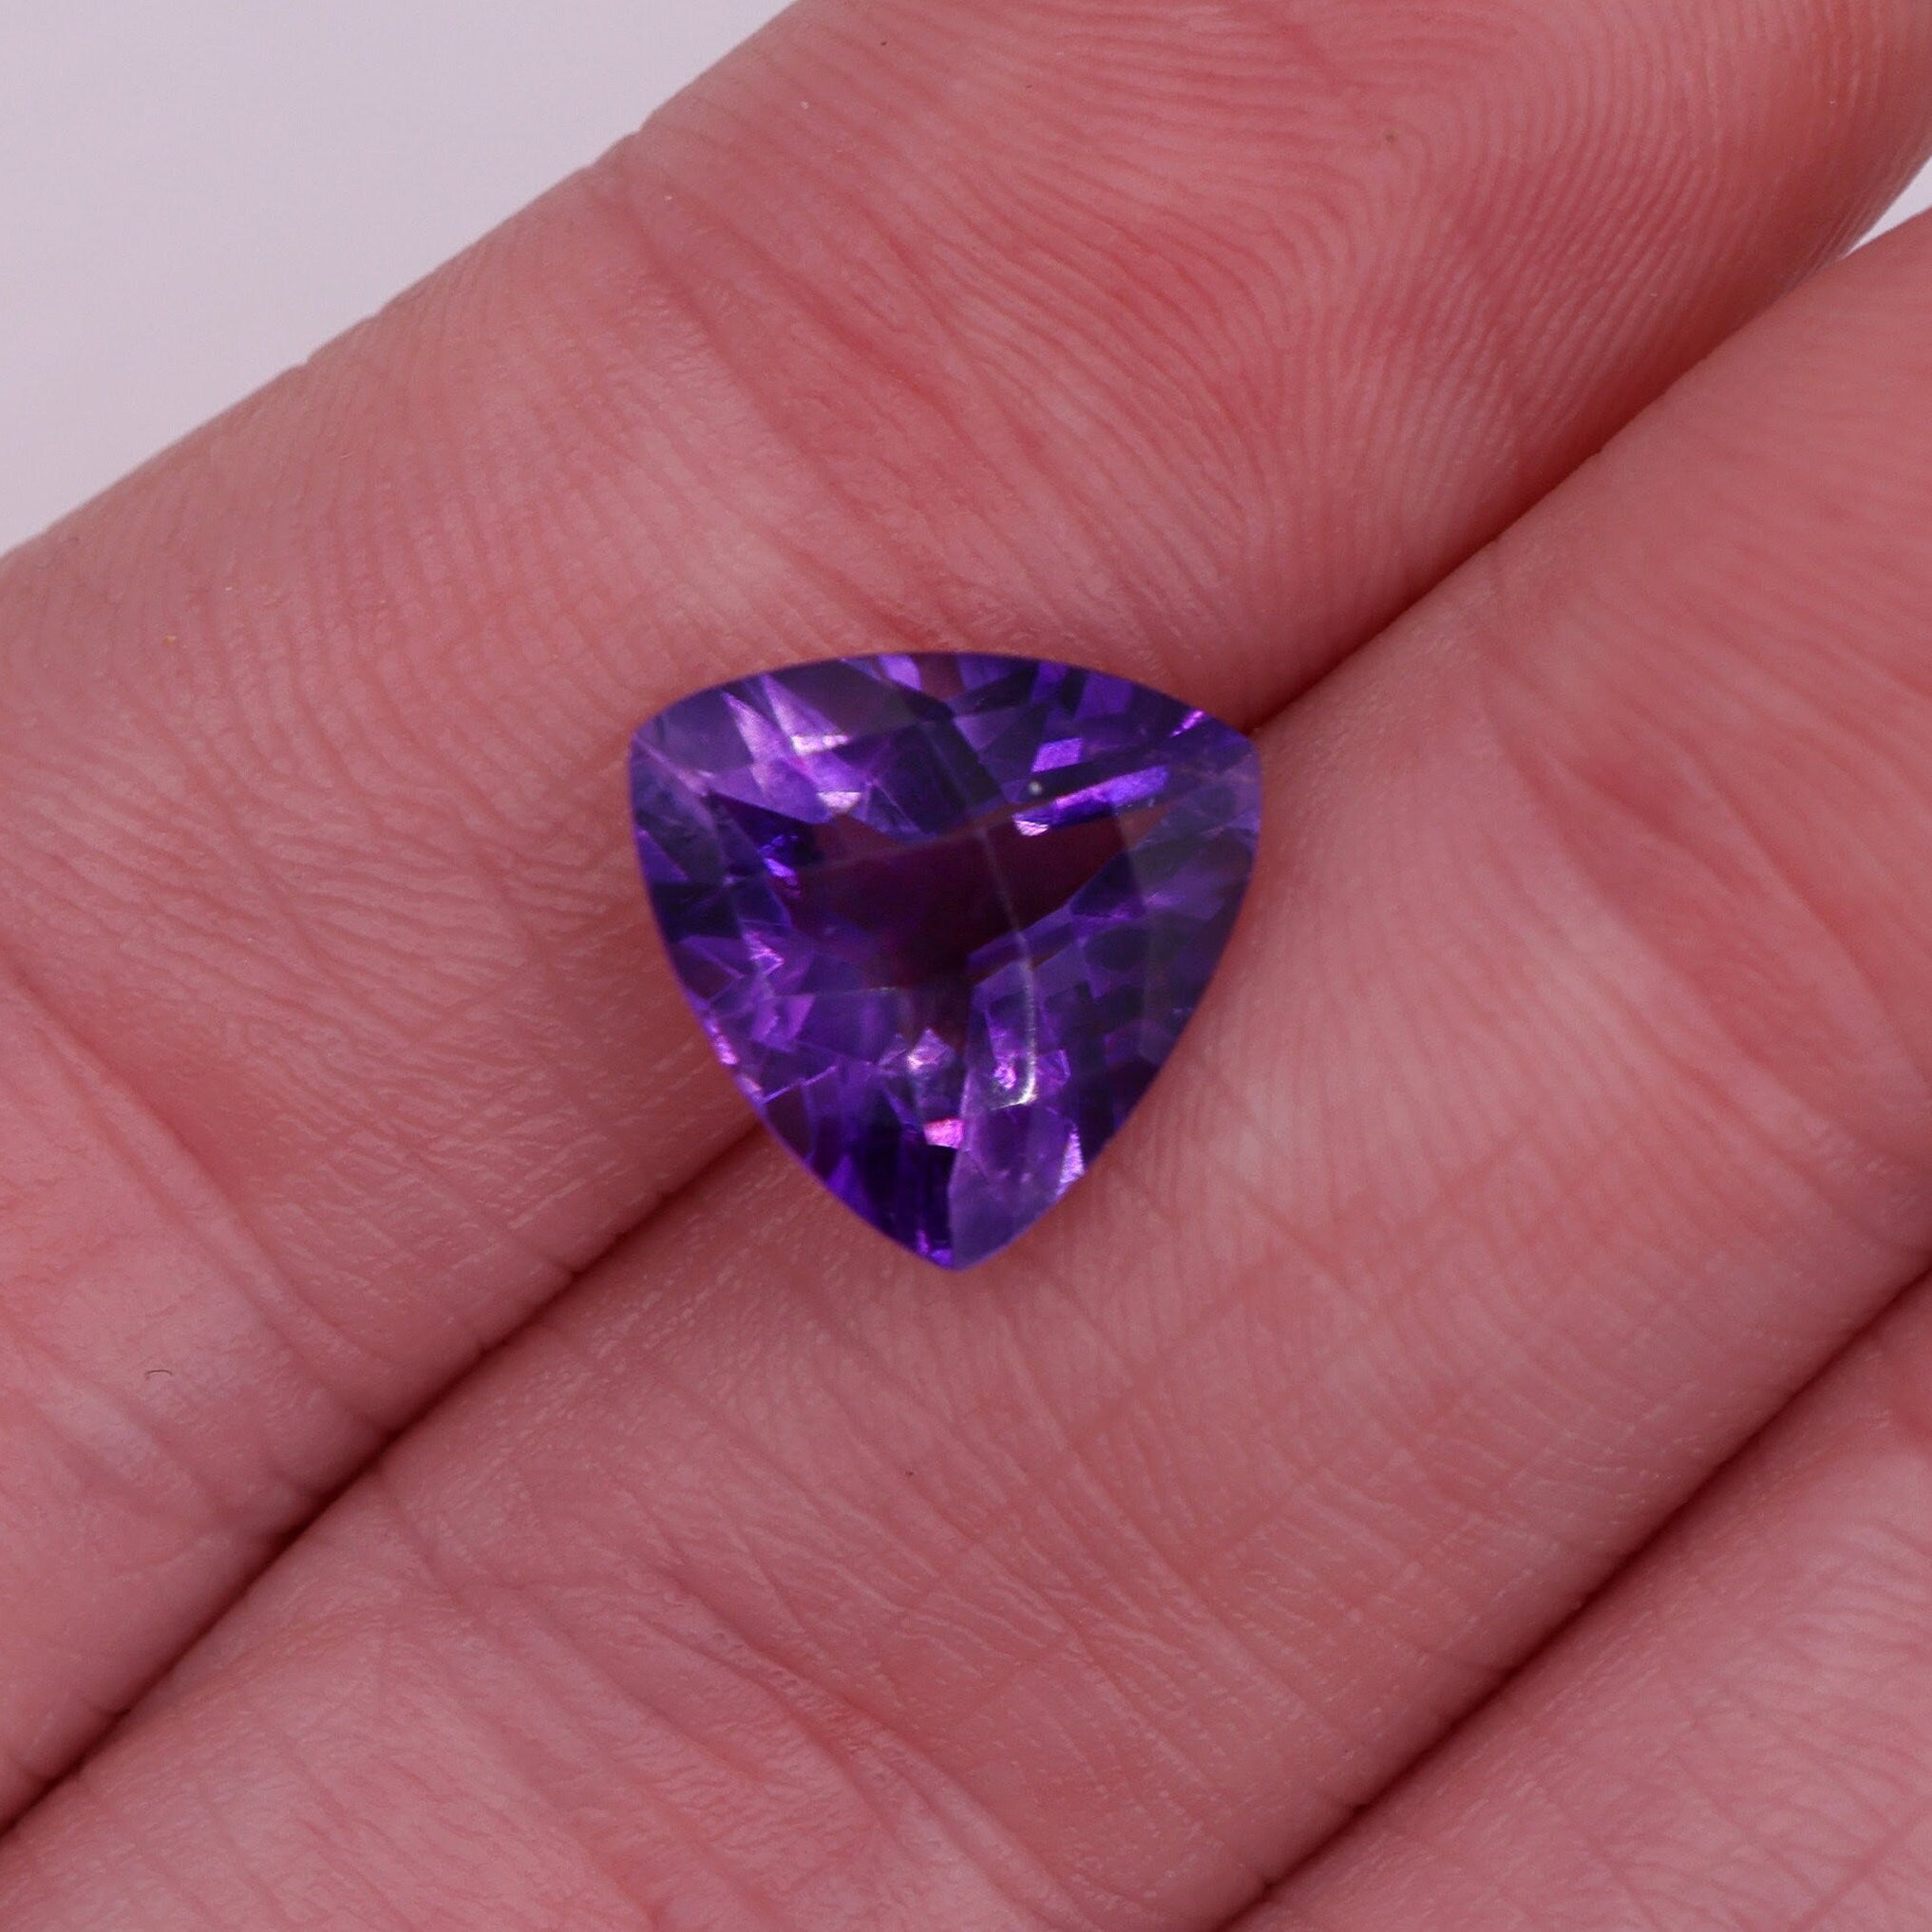 Gemstones-Deep Purple Amethyst Checker Topped Loose Gemstones || Trillion 5mm 9mm 10mm 11mm || Zambian Amethyst || February Birthstone || - NNJGemstones